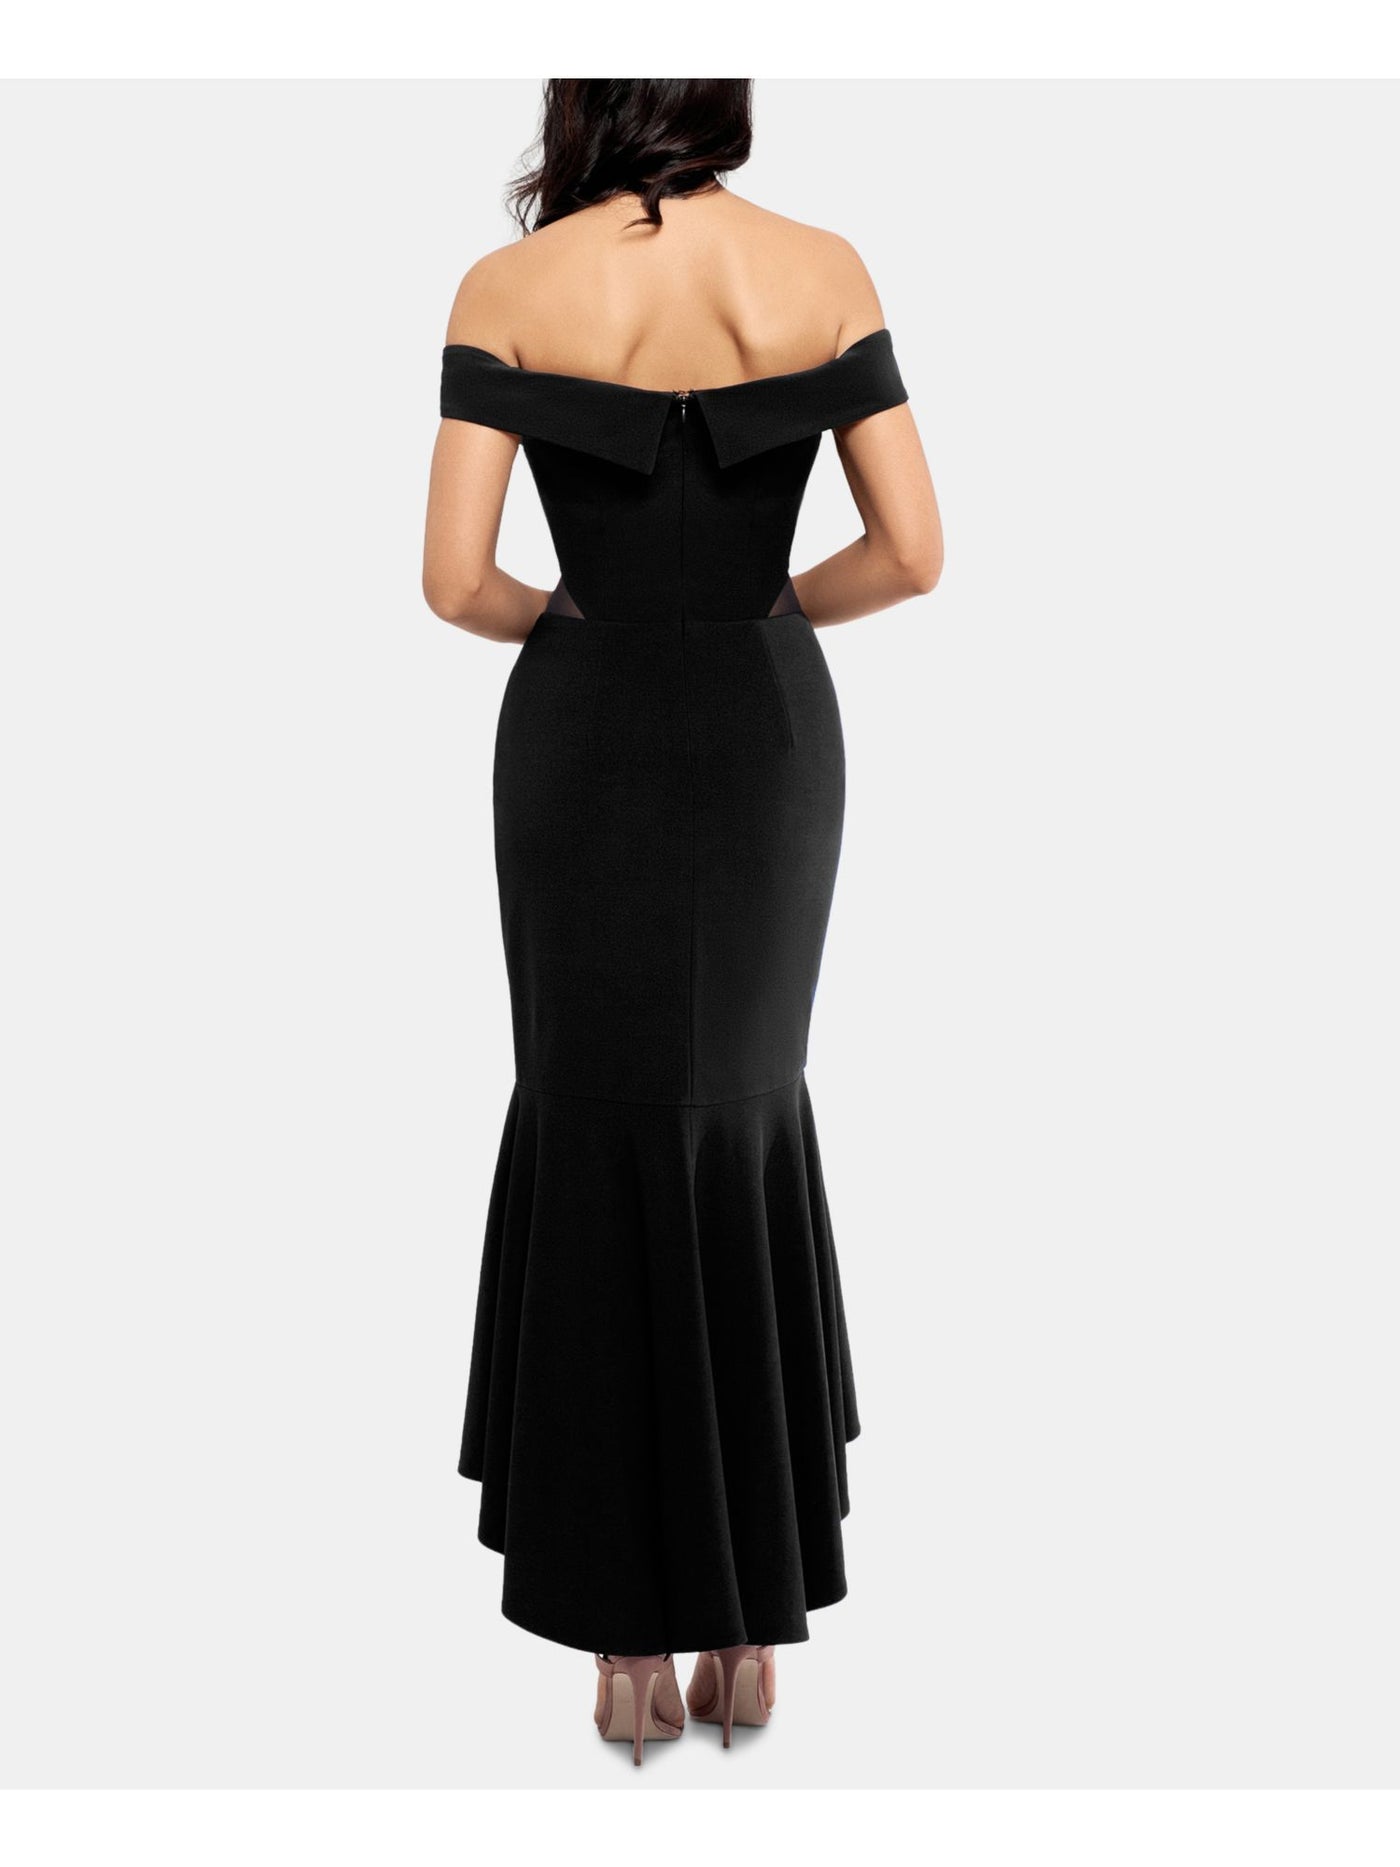 XSCAPE Womens Black Short Sleeve Off Shoulder Tea-Length Evening Hi-Lo Dress 2